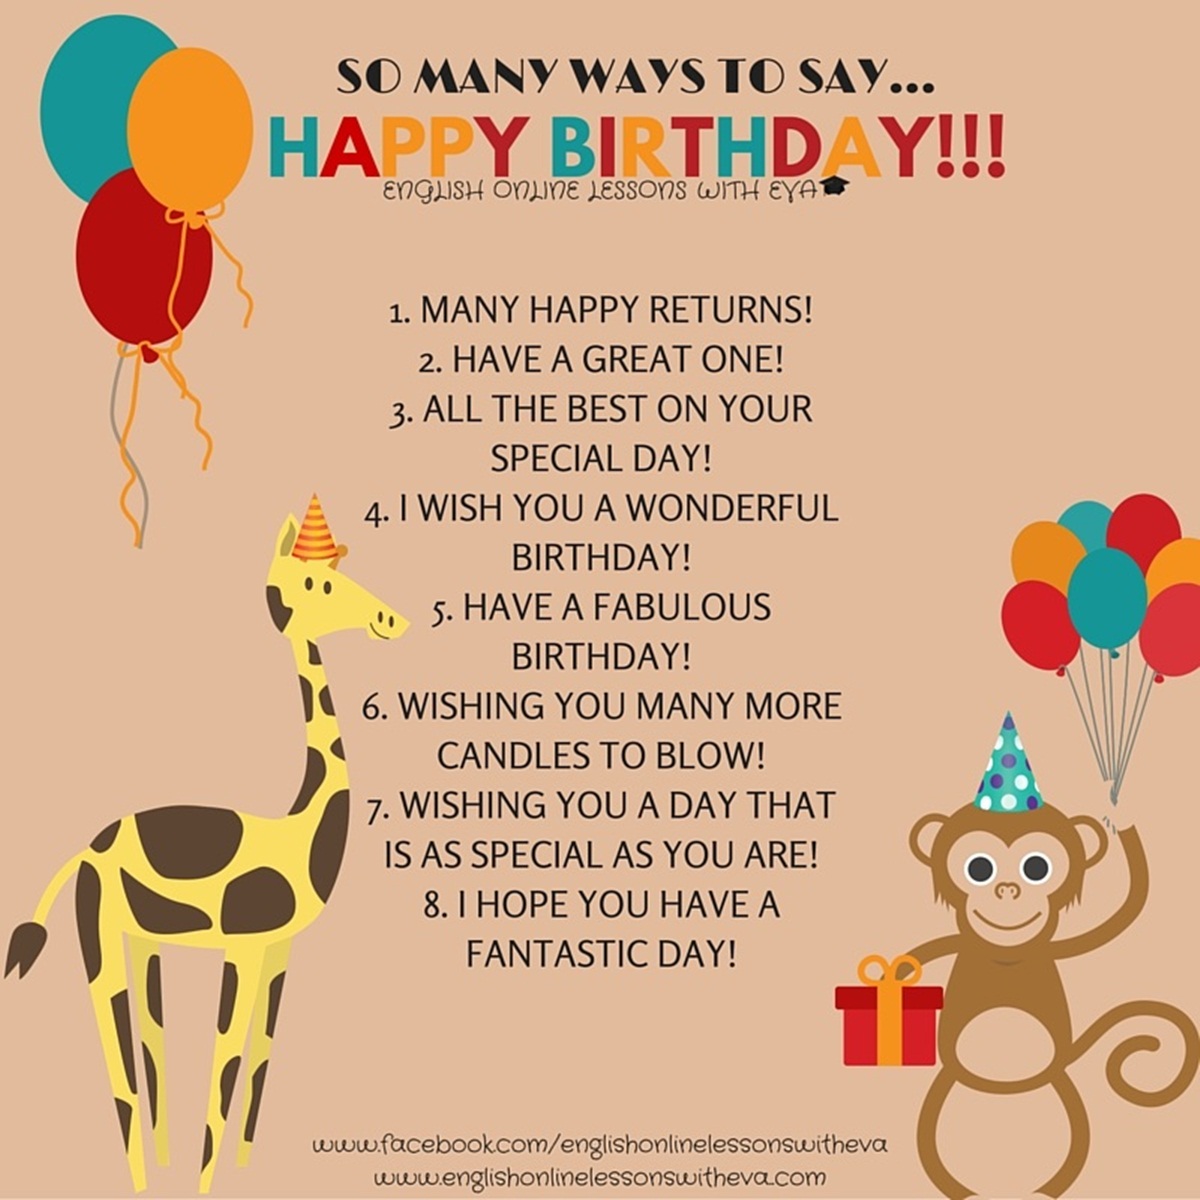 Many Ways to Say Happy Birthday - English Learn Site